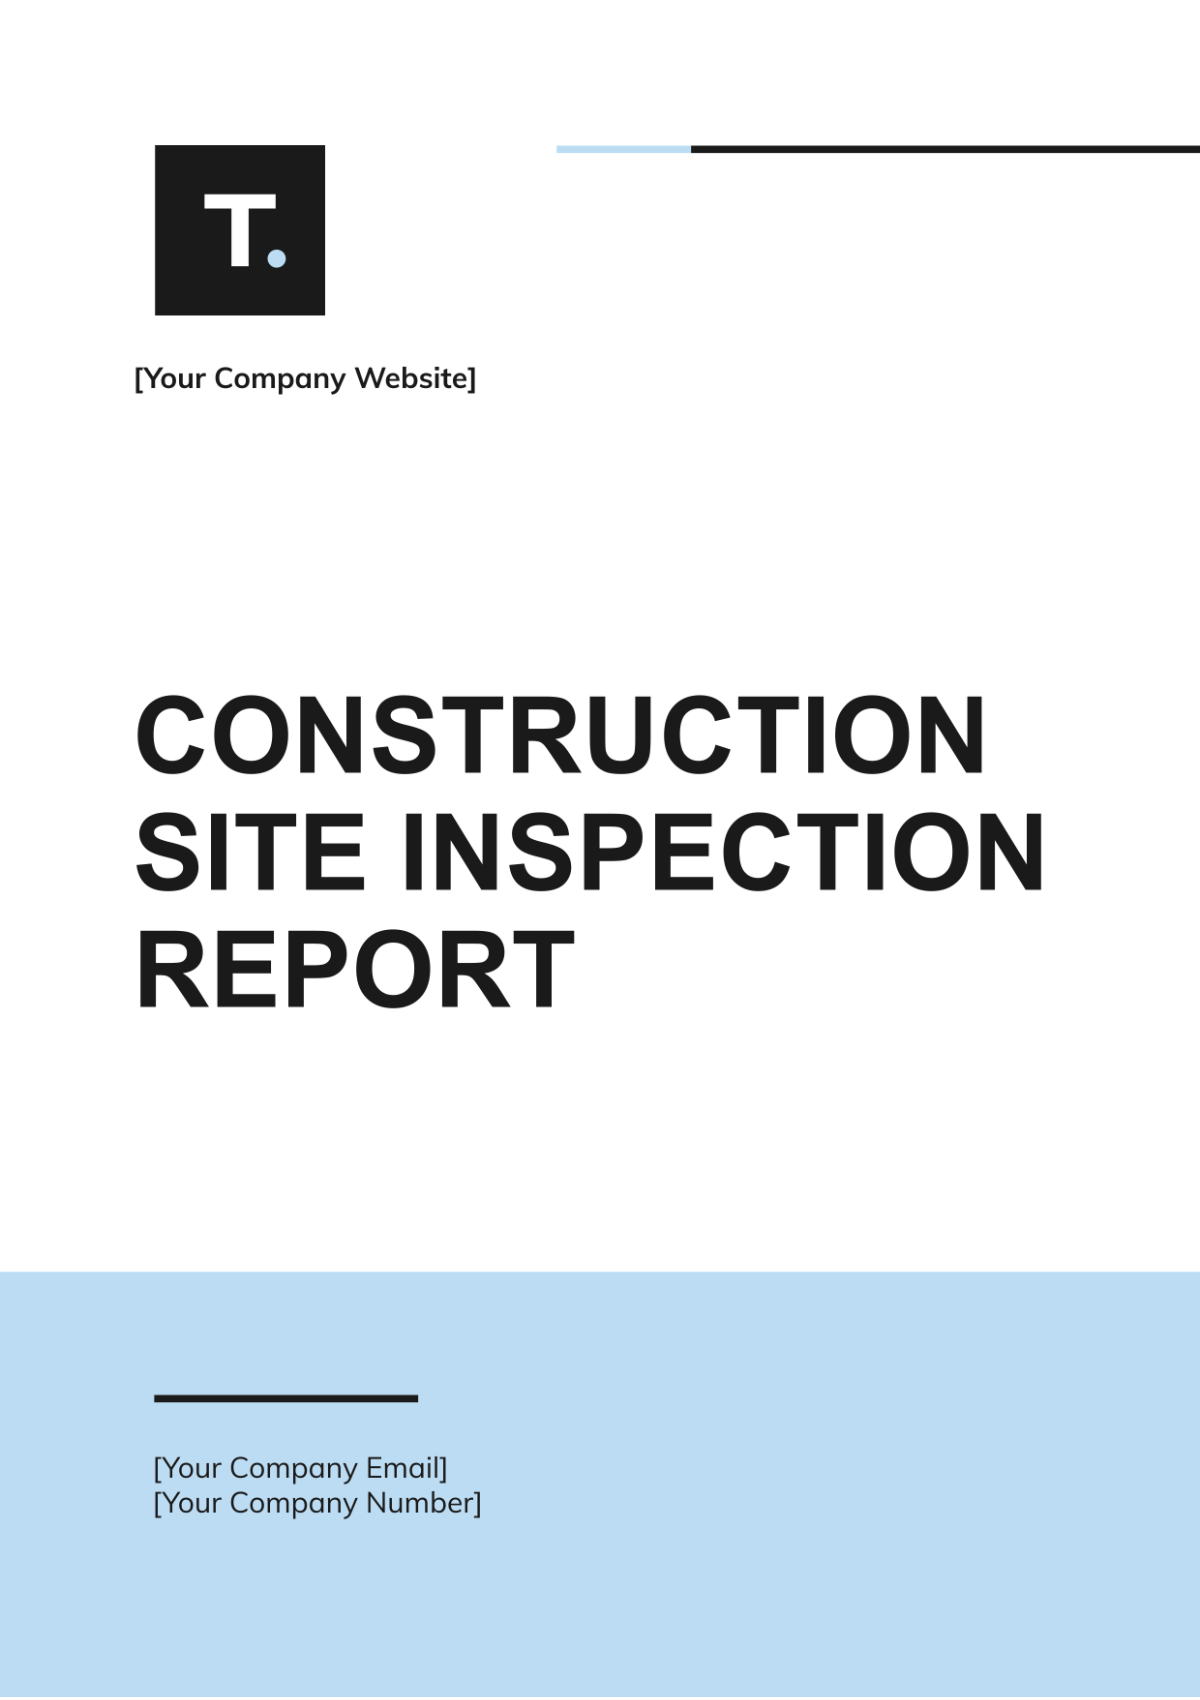 Construction Site Inspection Report Template Edit Online Download